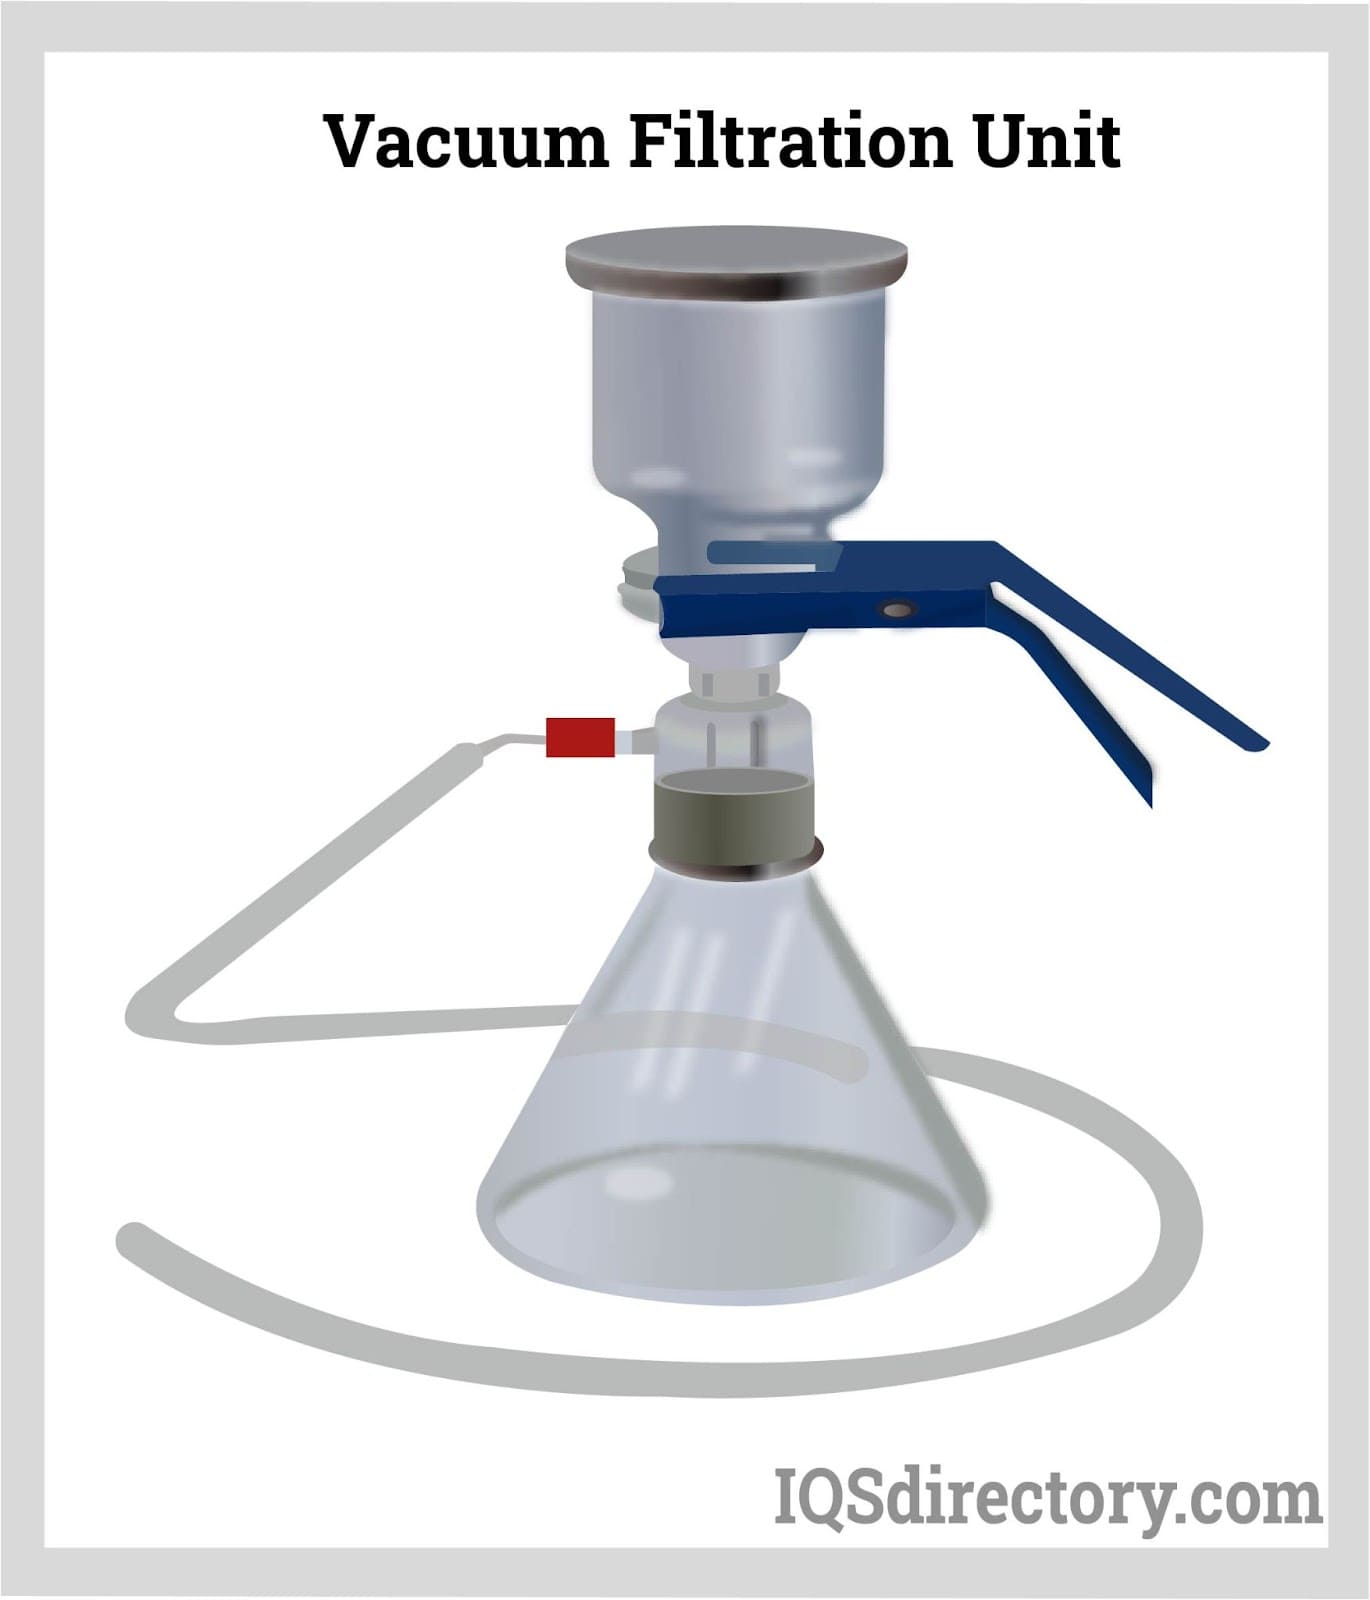 Vacuum filtration unit